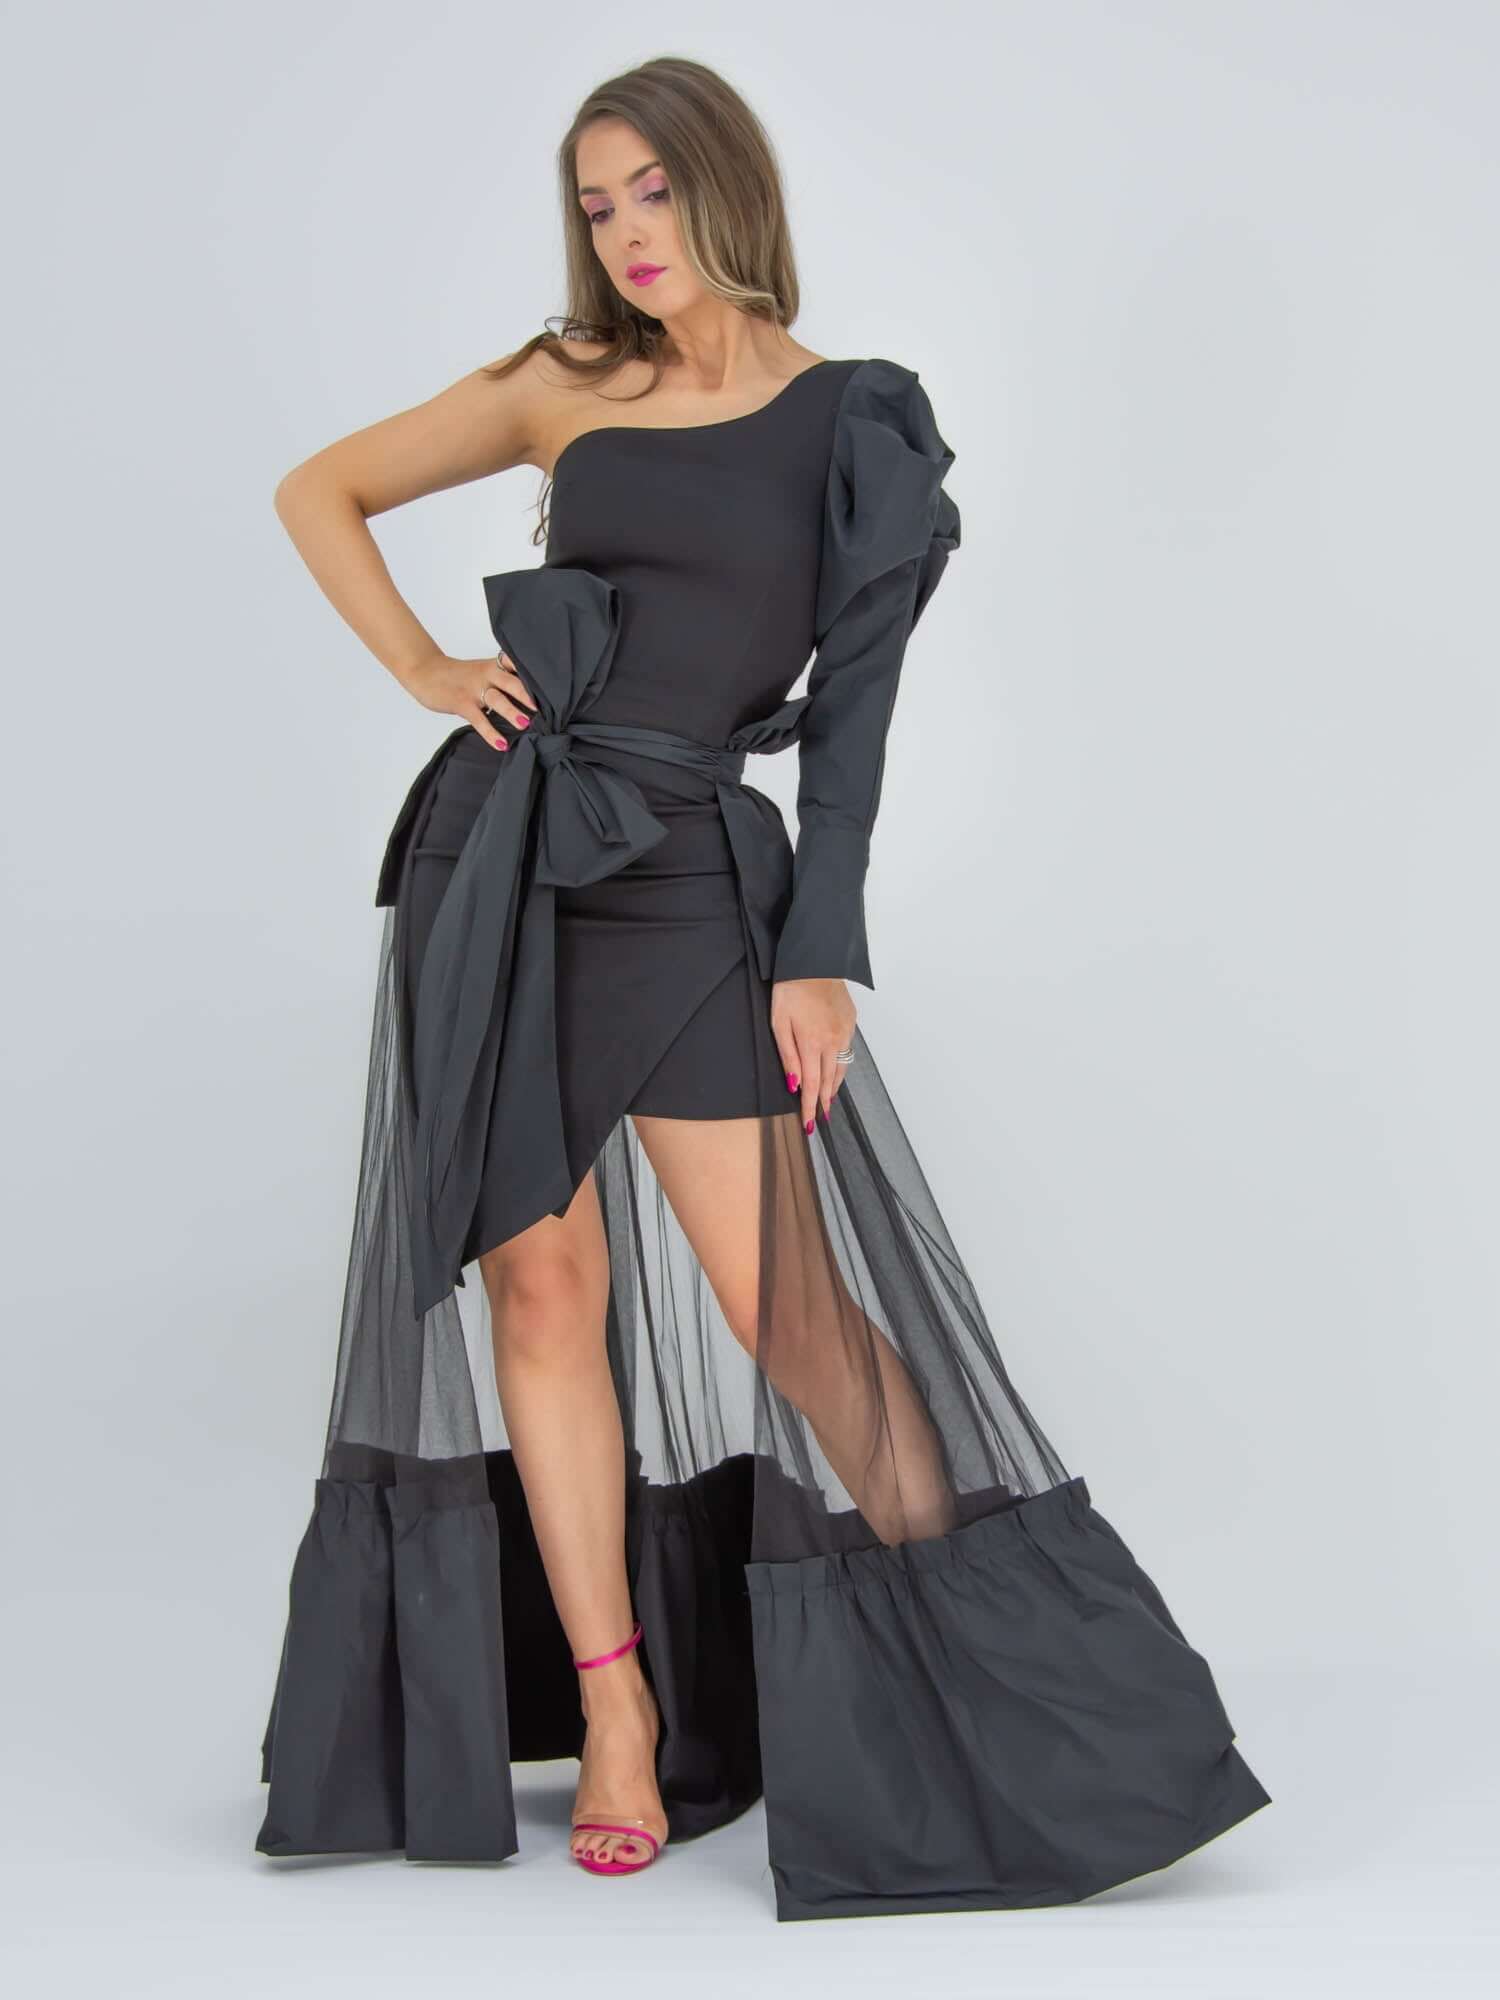 '80s Fairytale Floor-Length Self-Tie Belt by Tia Dorraine Women's Luxury Fashion Designer Clothing Brand